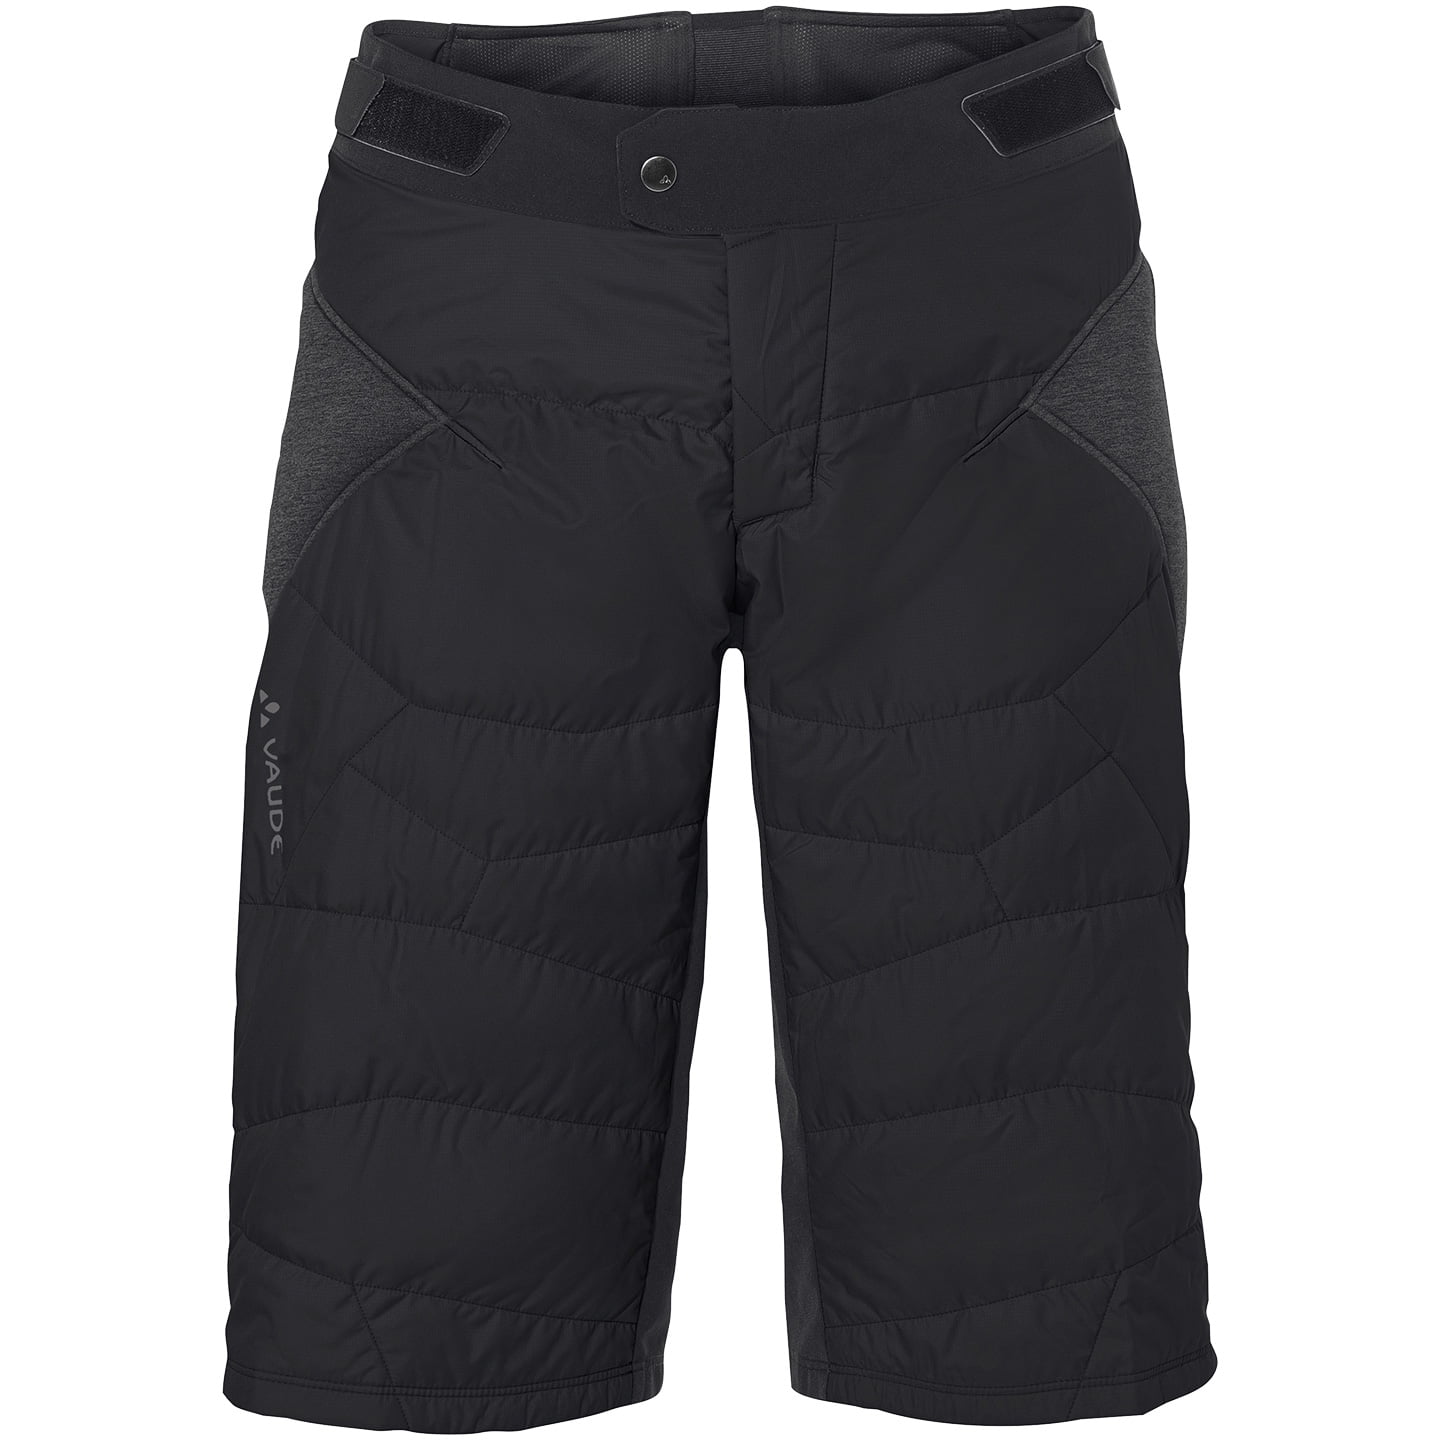 VAUDE Minaki III w/o Pad Bike Shorts, for men, size L, MTB shorts, MTB clothing